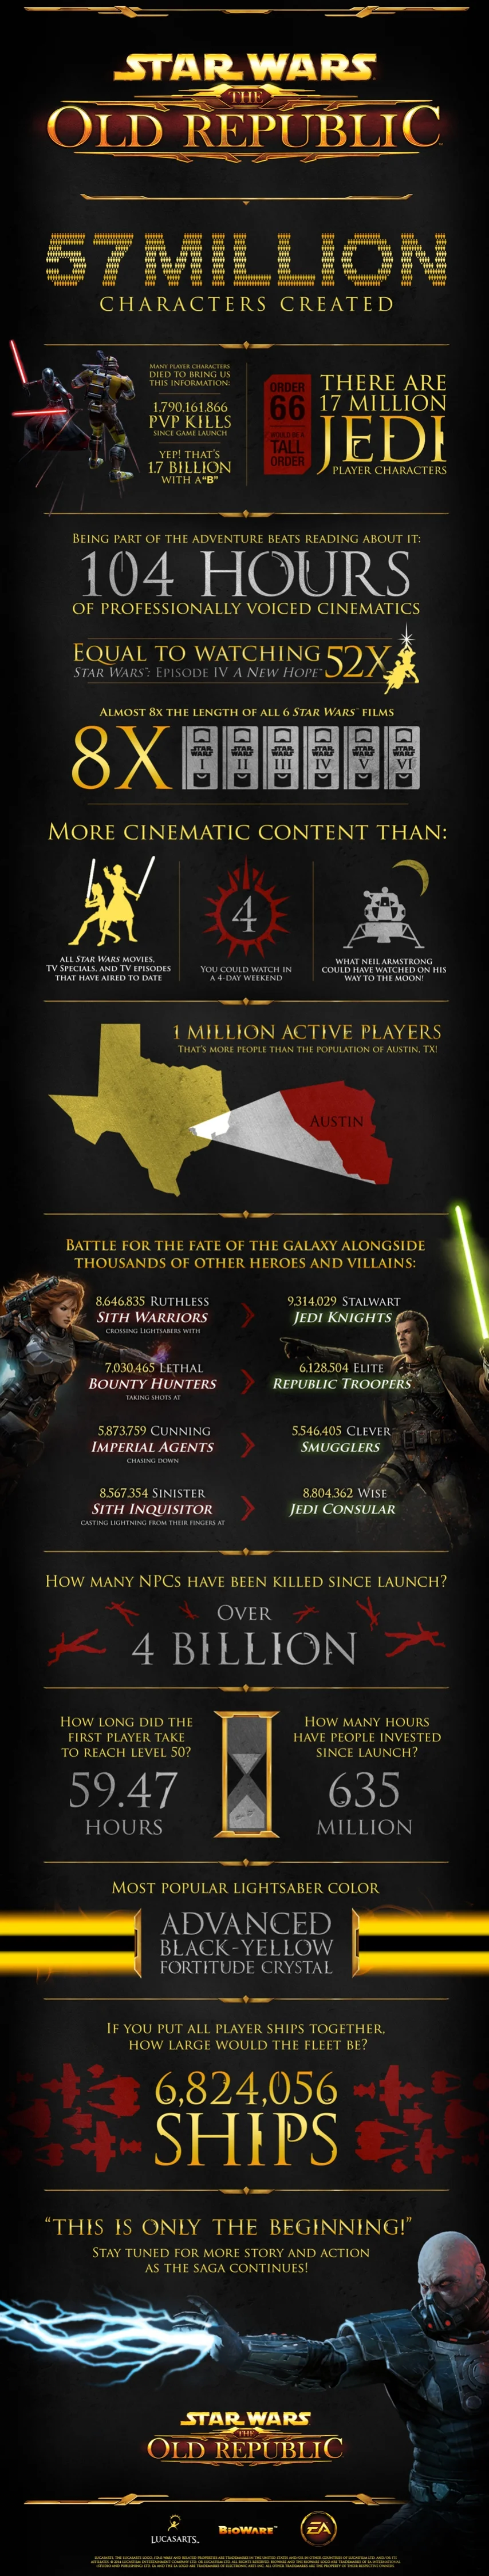 Star Wars: The Old Republic дополнят 9 декабря - фото 1